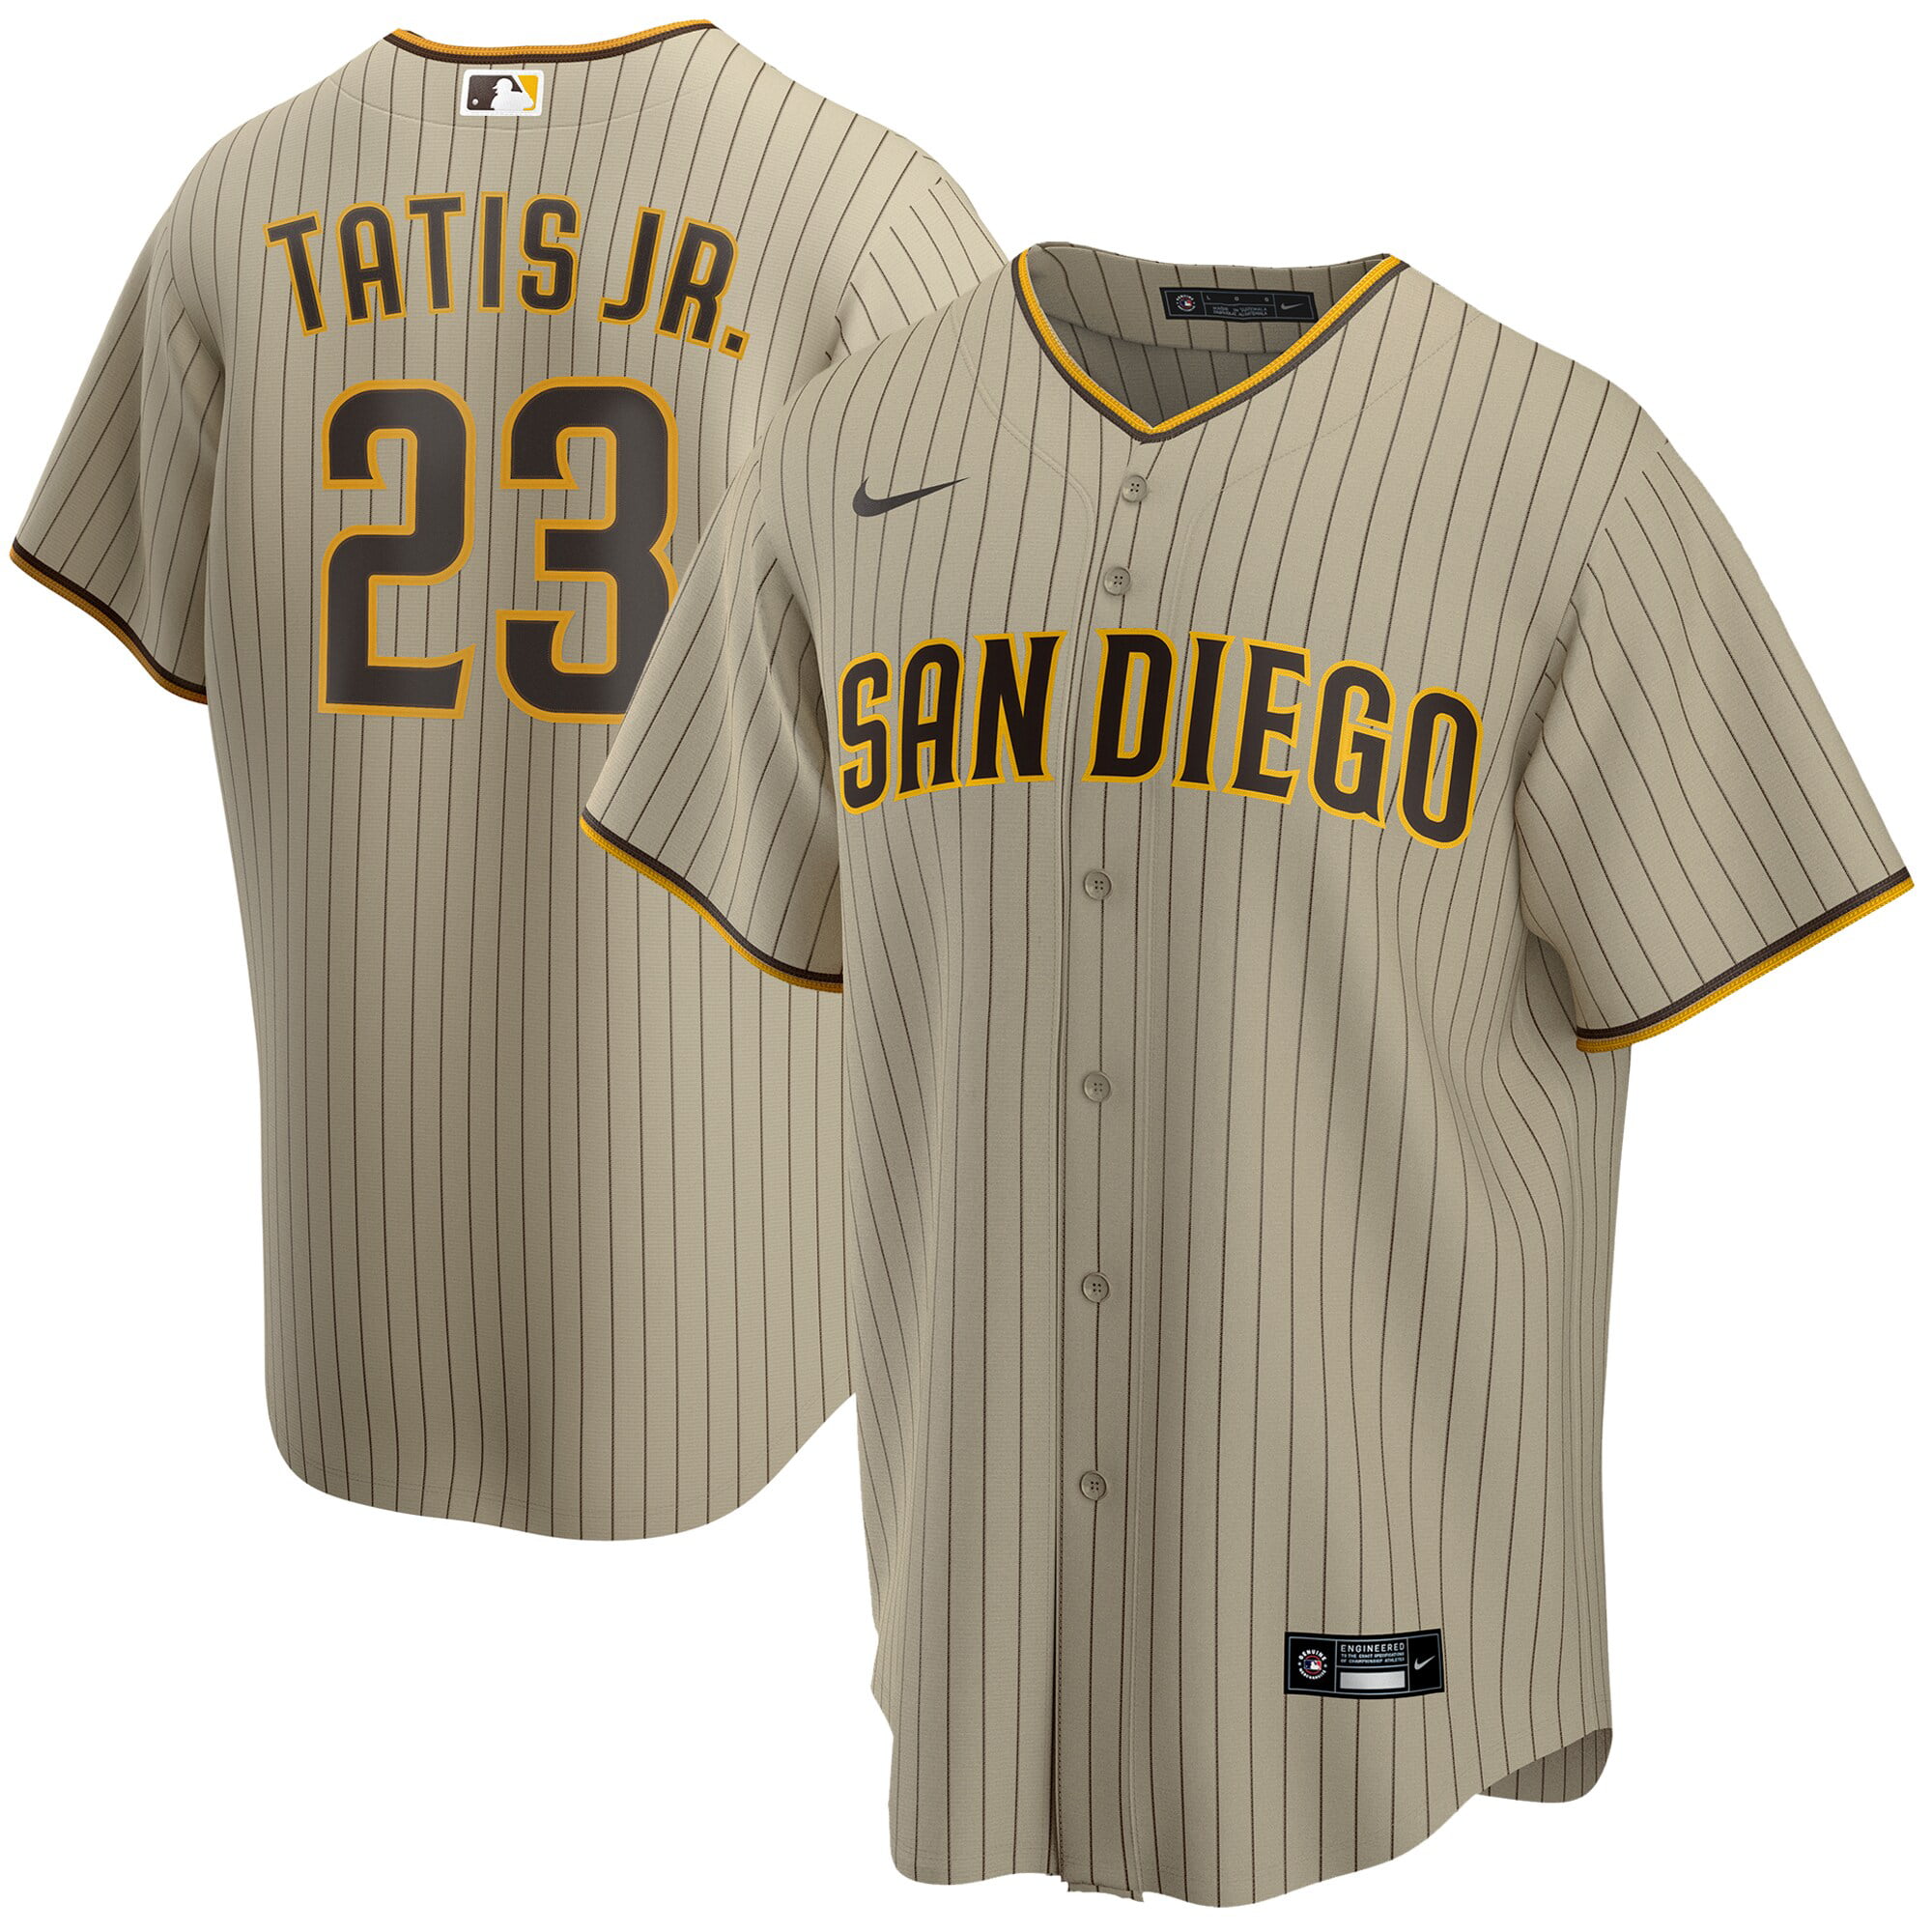 Fernando Tat-s San Diego Padres Nike Alternate 2020 Replica Player Jersey - Tan/Brown ...